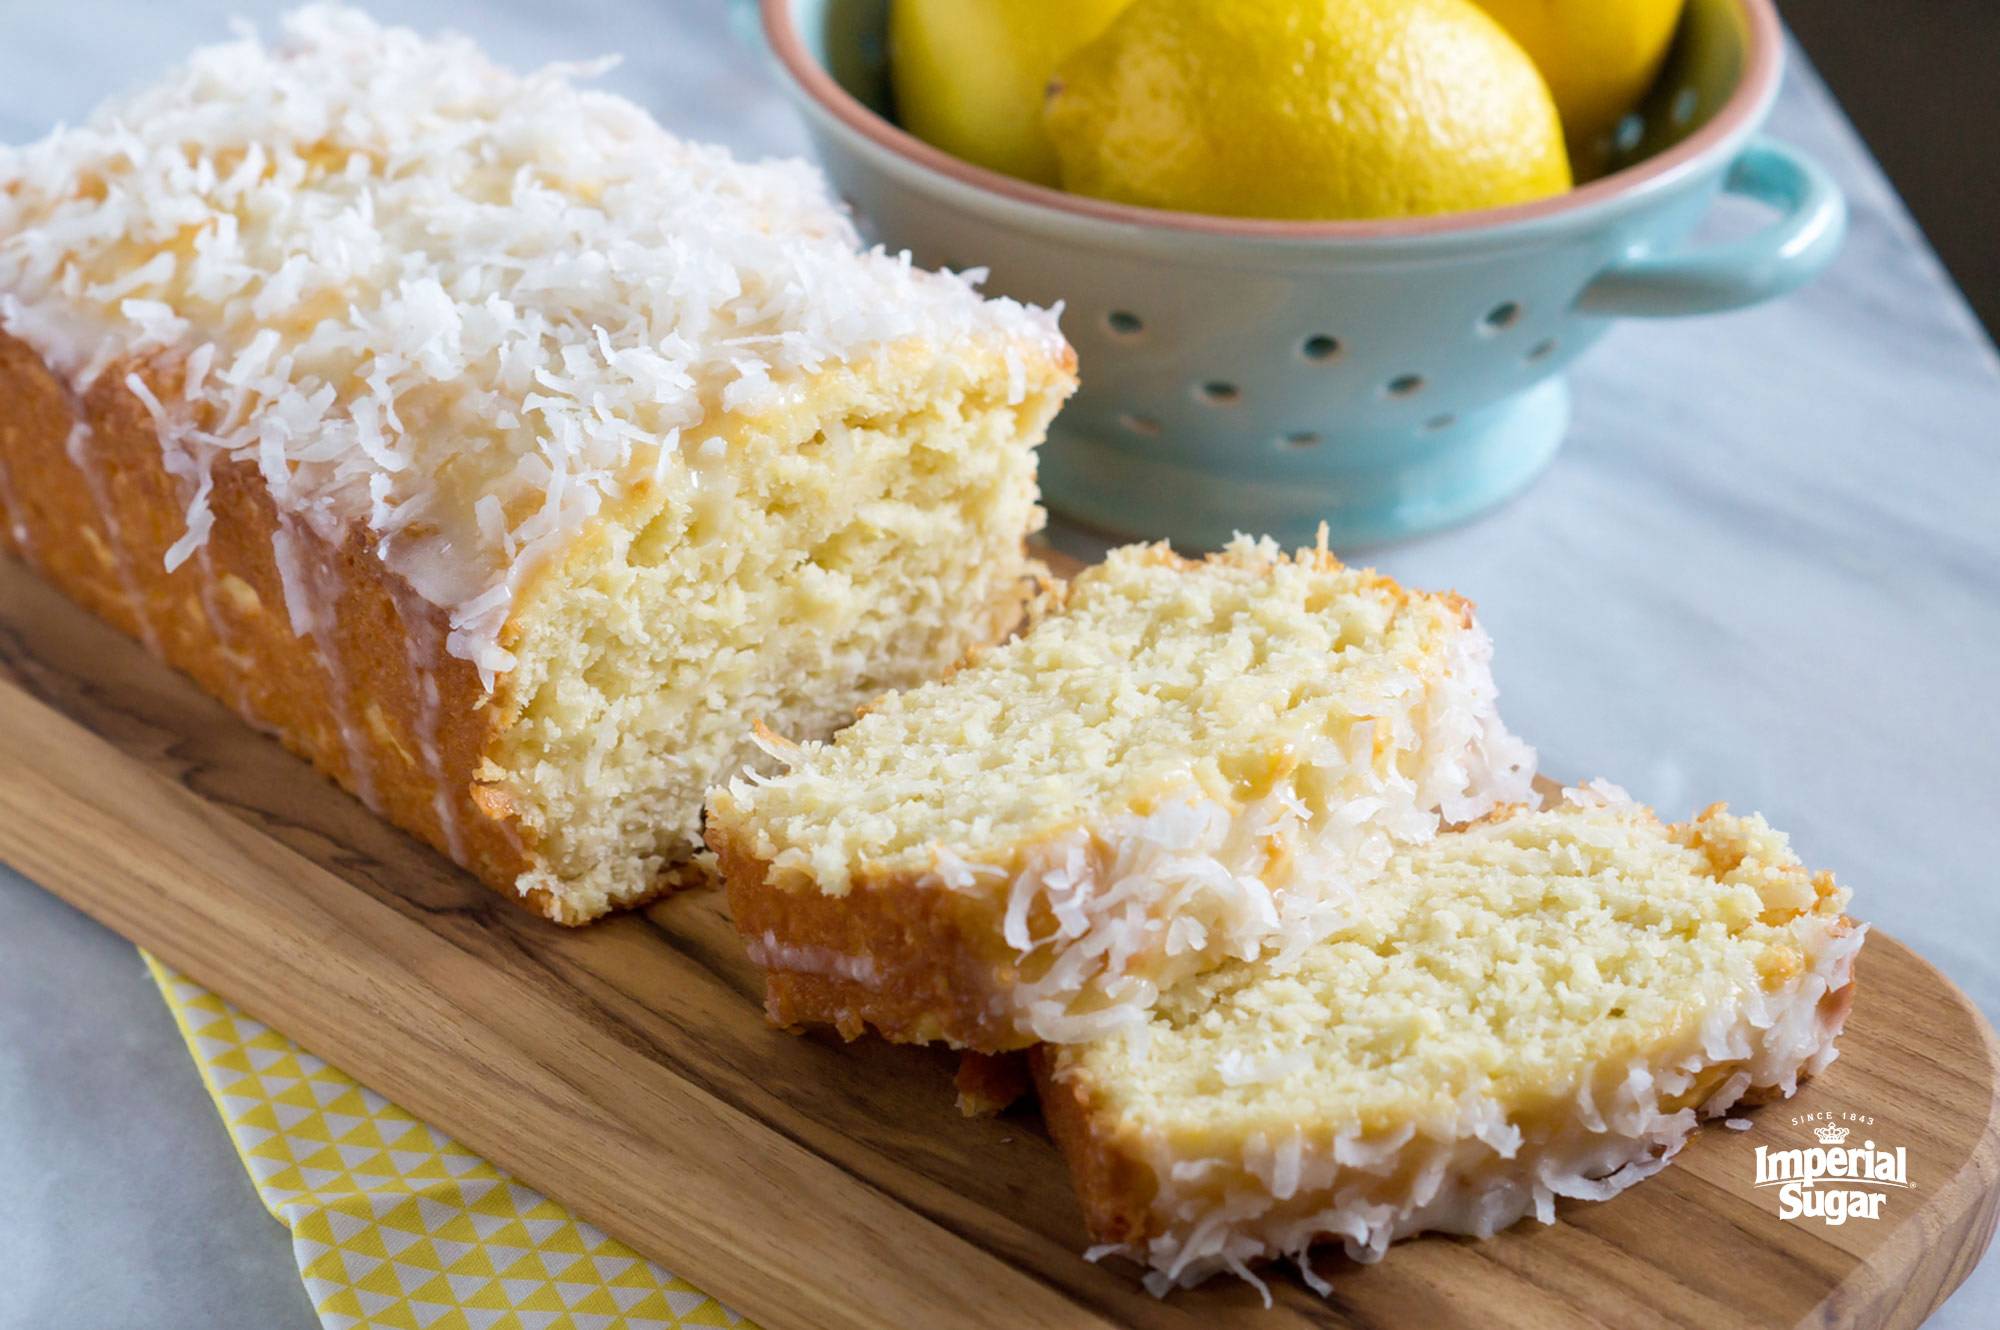 Lemon-Filled Coconut Cake Recipe: How to Make It